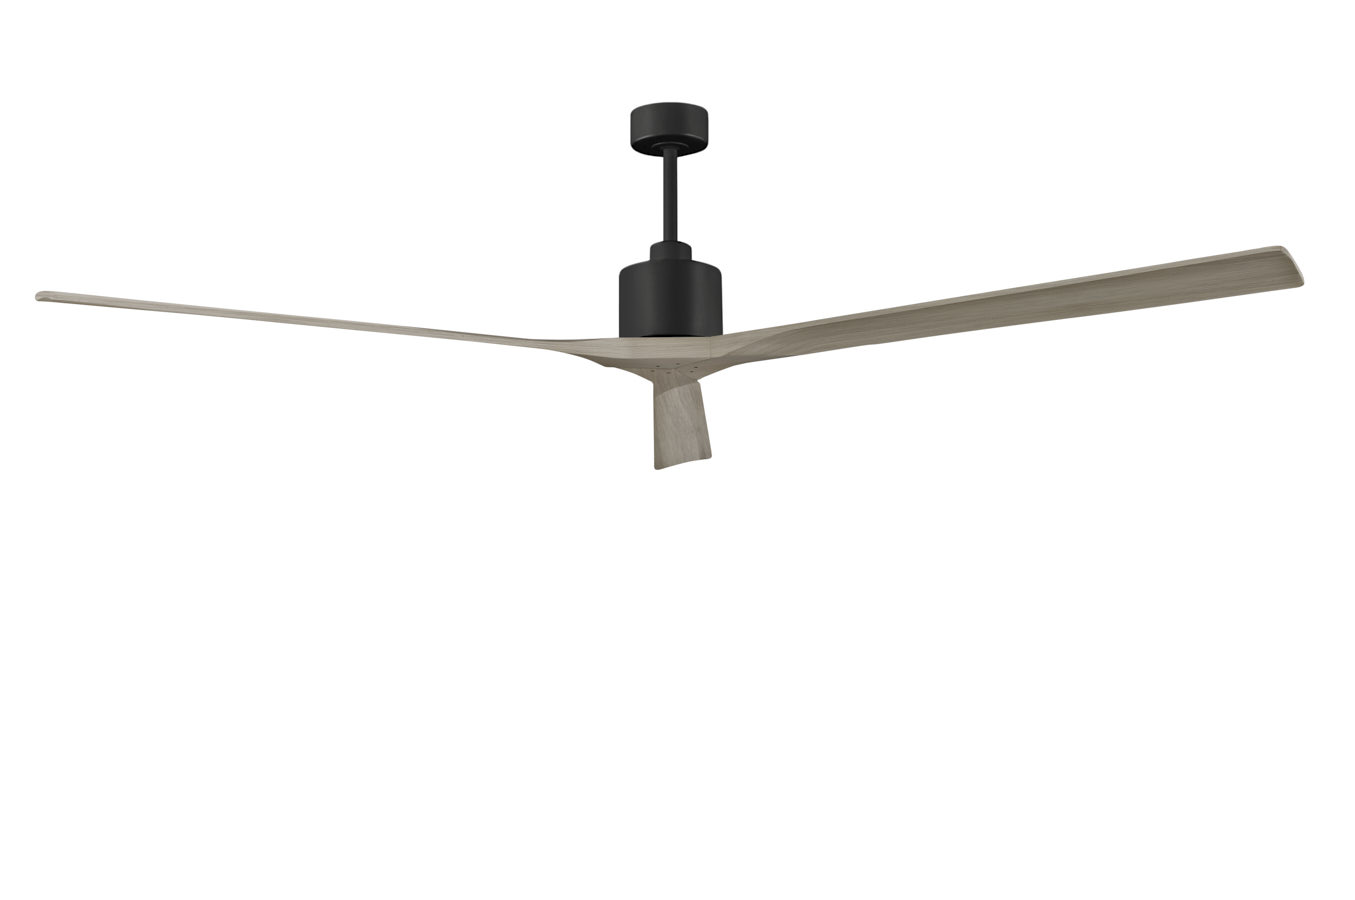 Nan XL ceiling fan in Matte Black with 90” Gray Ash blades